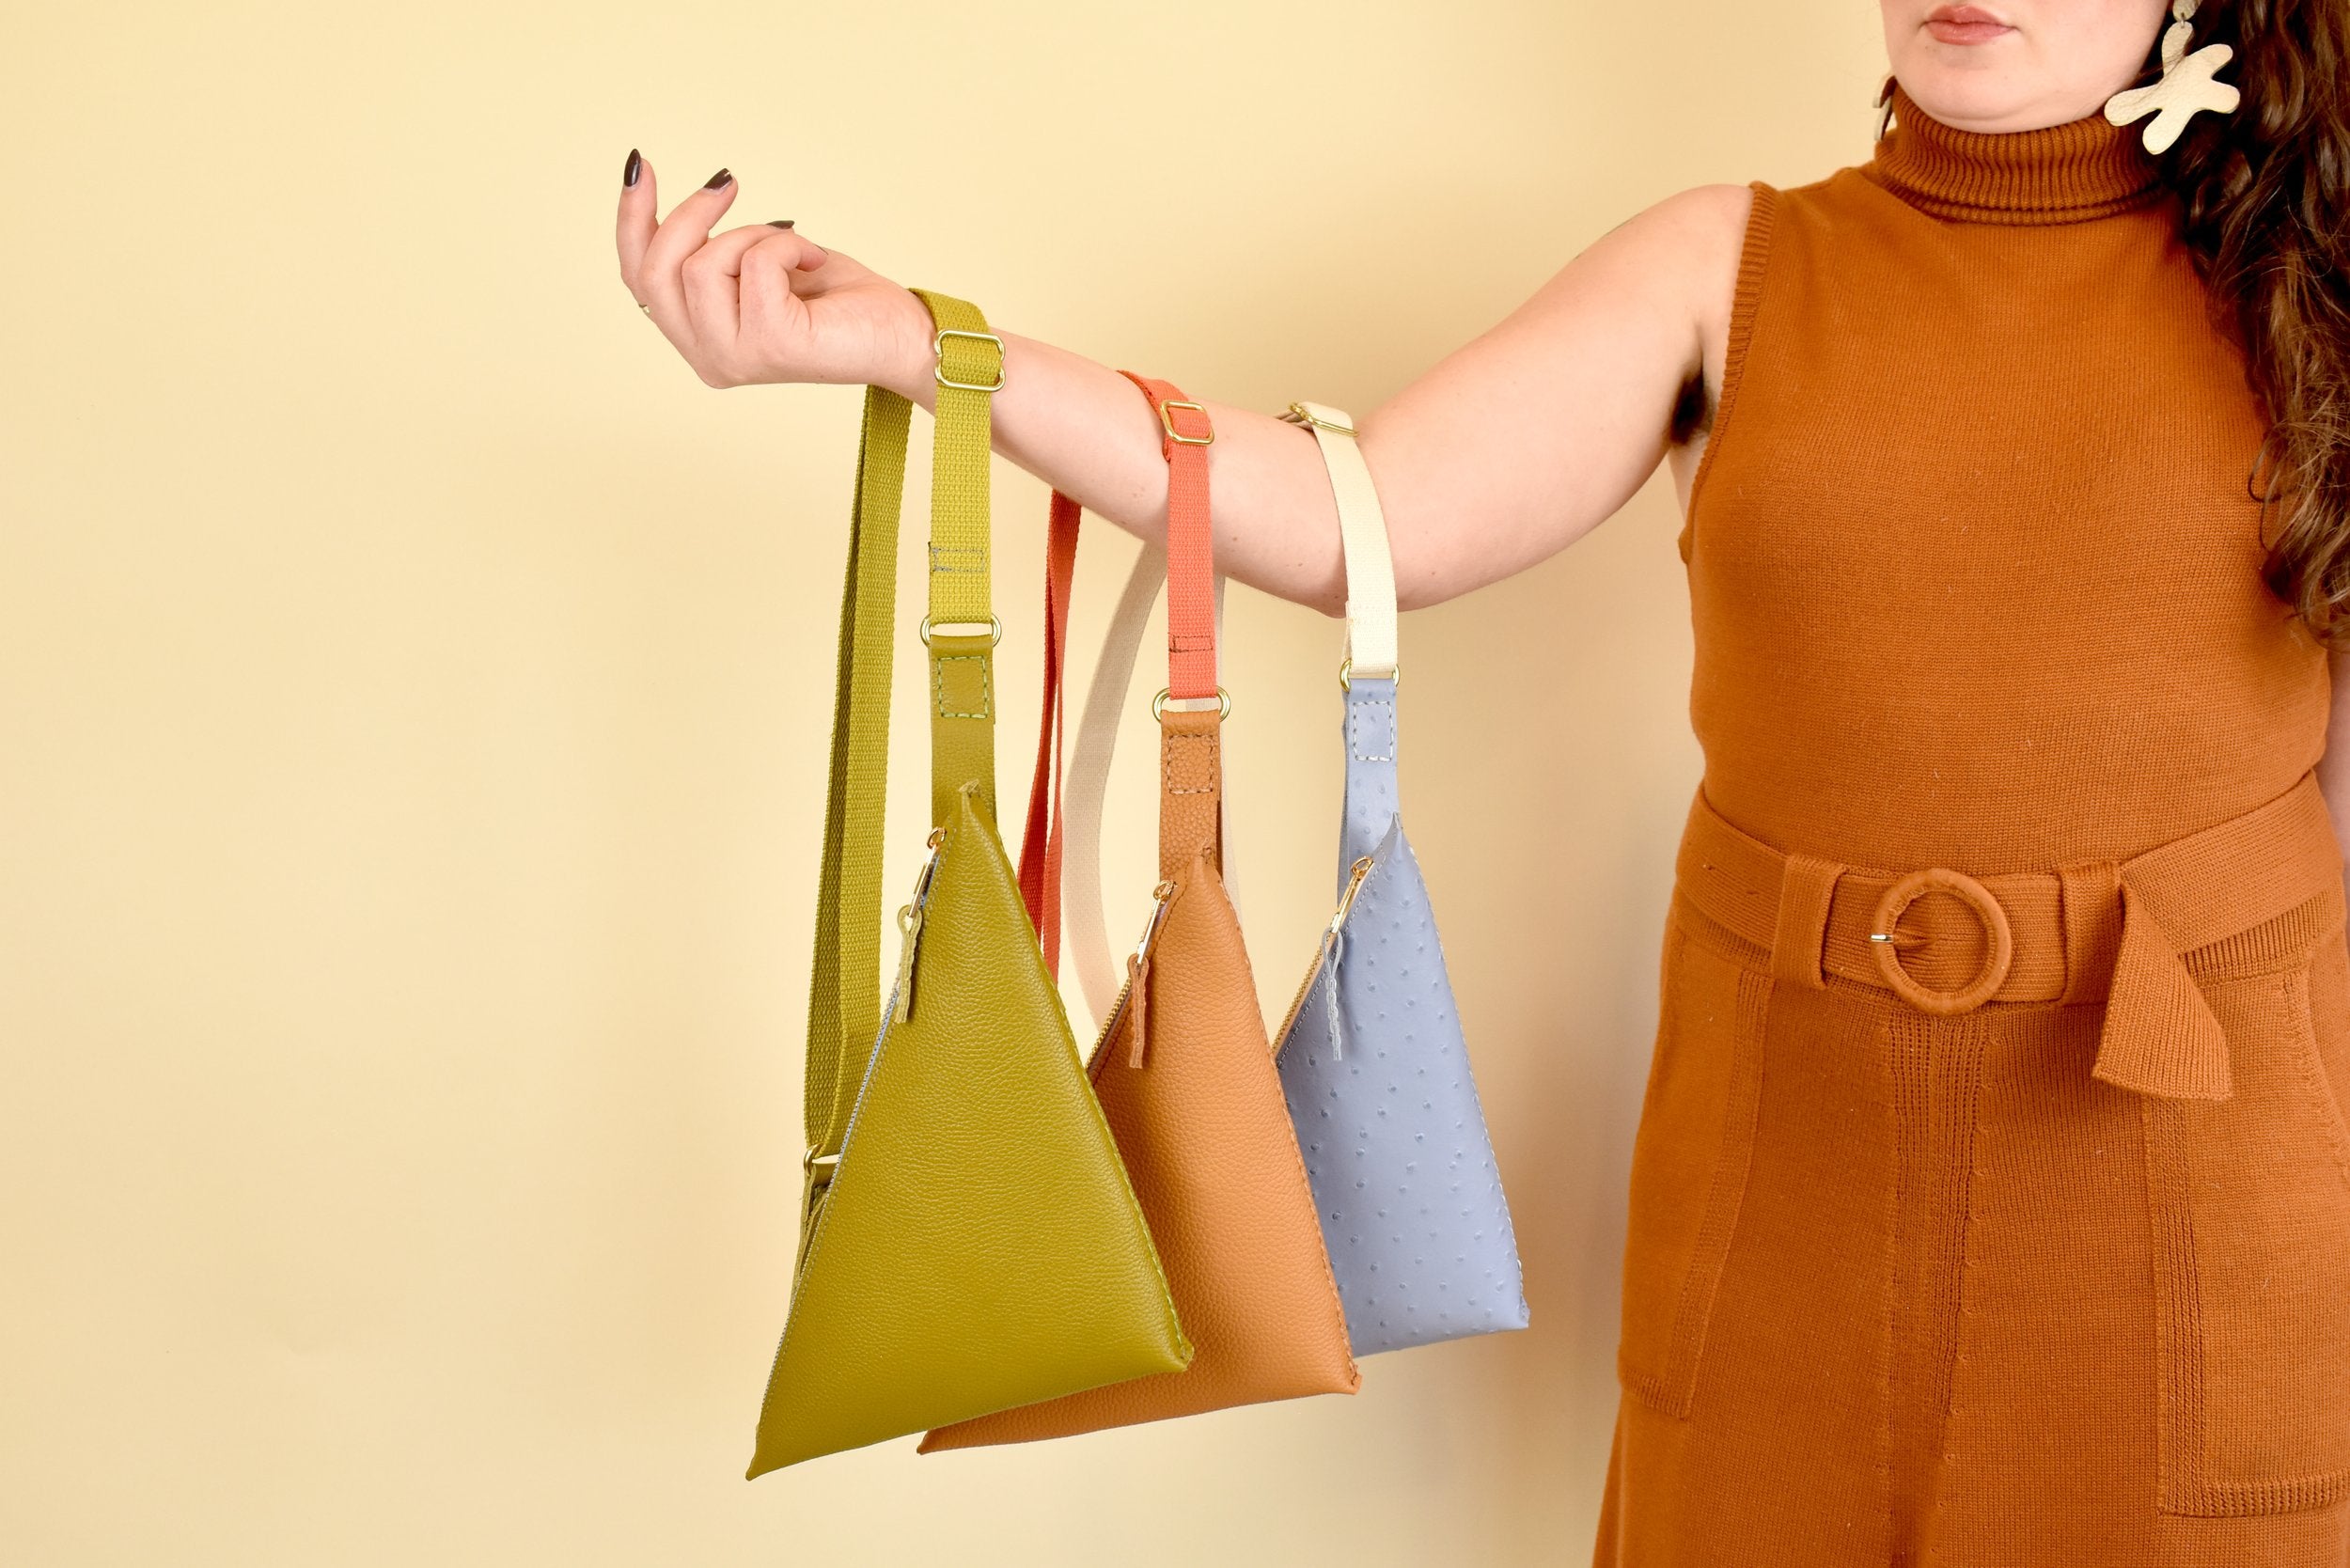 Triangle mini leather cross-body bag | Prada